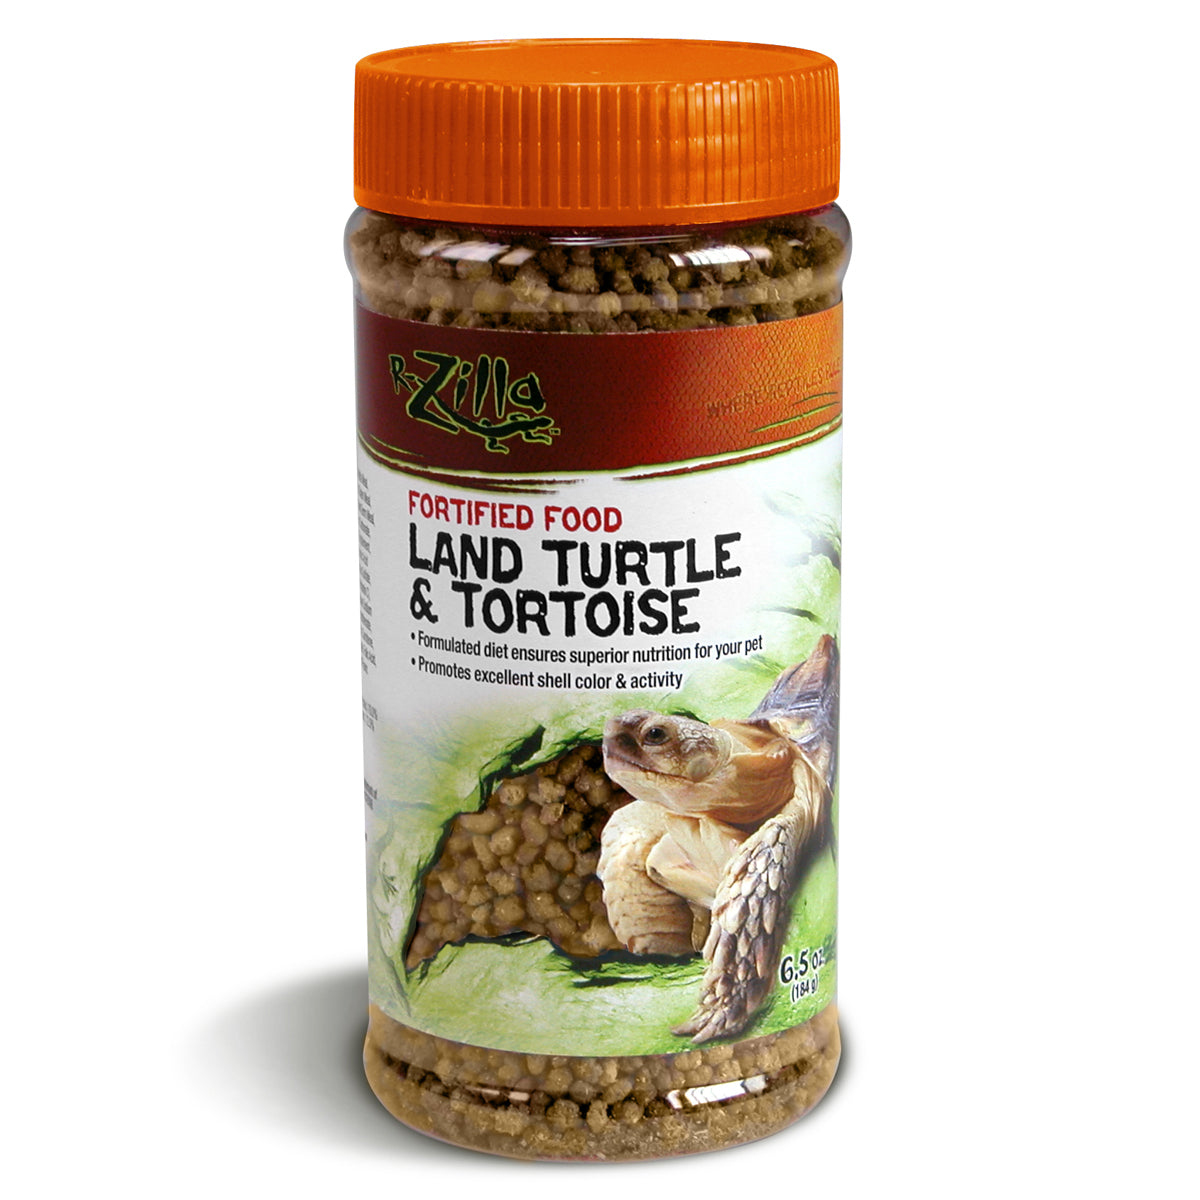 Zilla Fortified Land Turtle & Tortoise Food - 6.5 oz